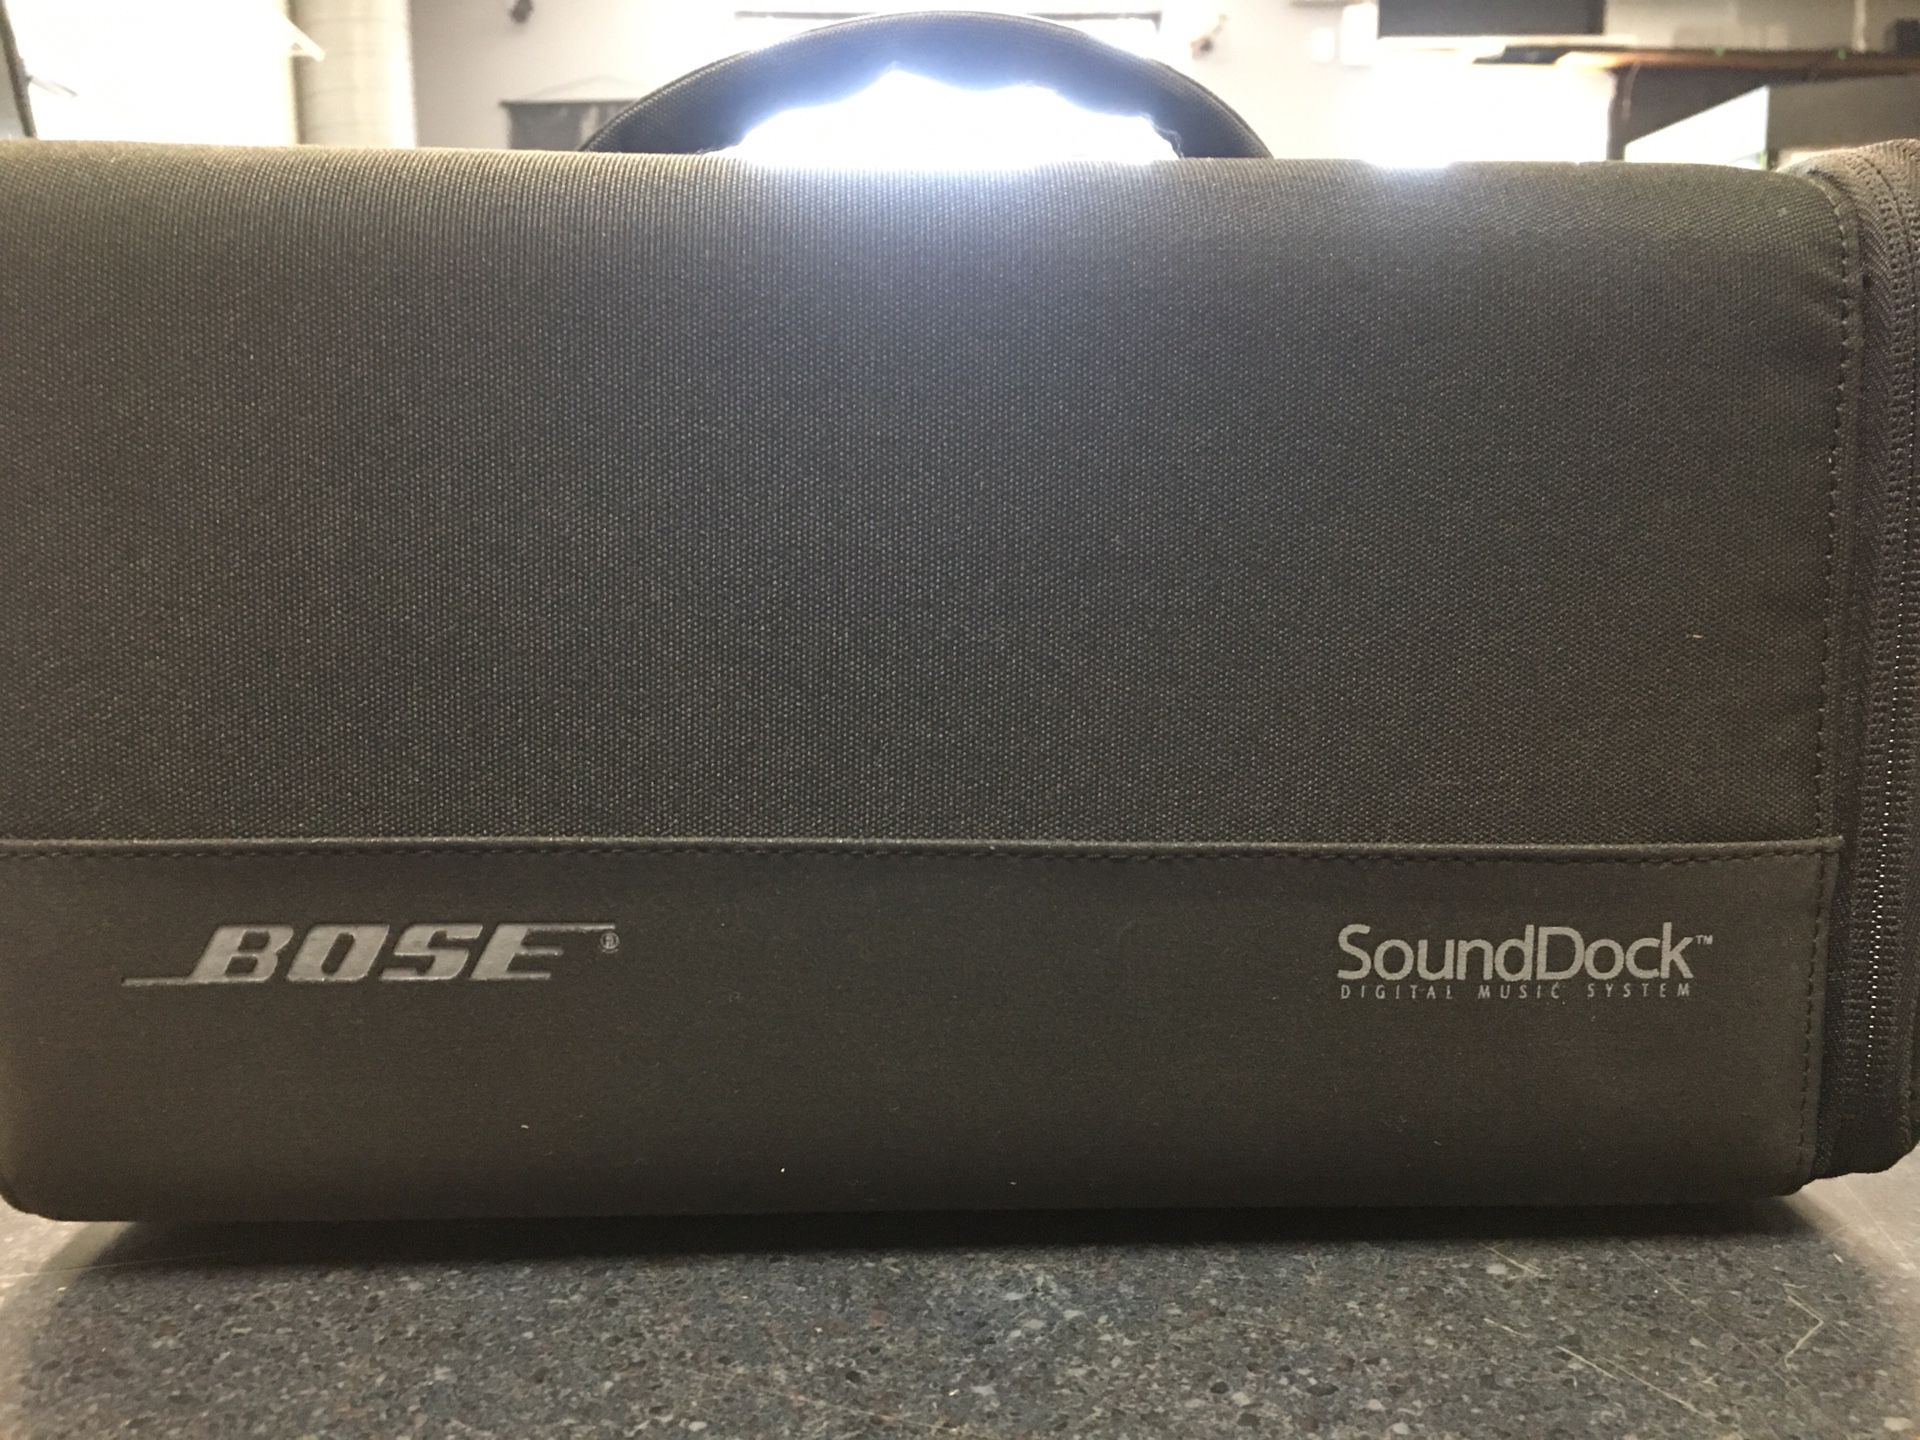 BOSE SoundDock DIGITAL MUSIC SYSTEM